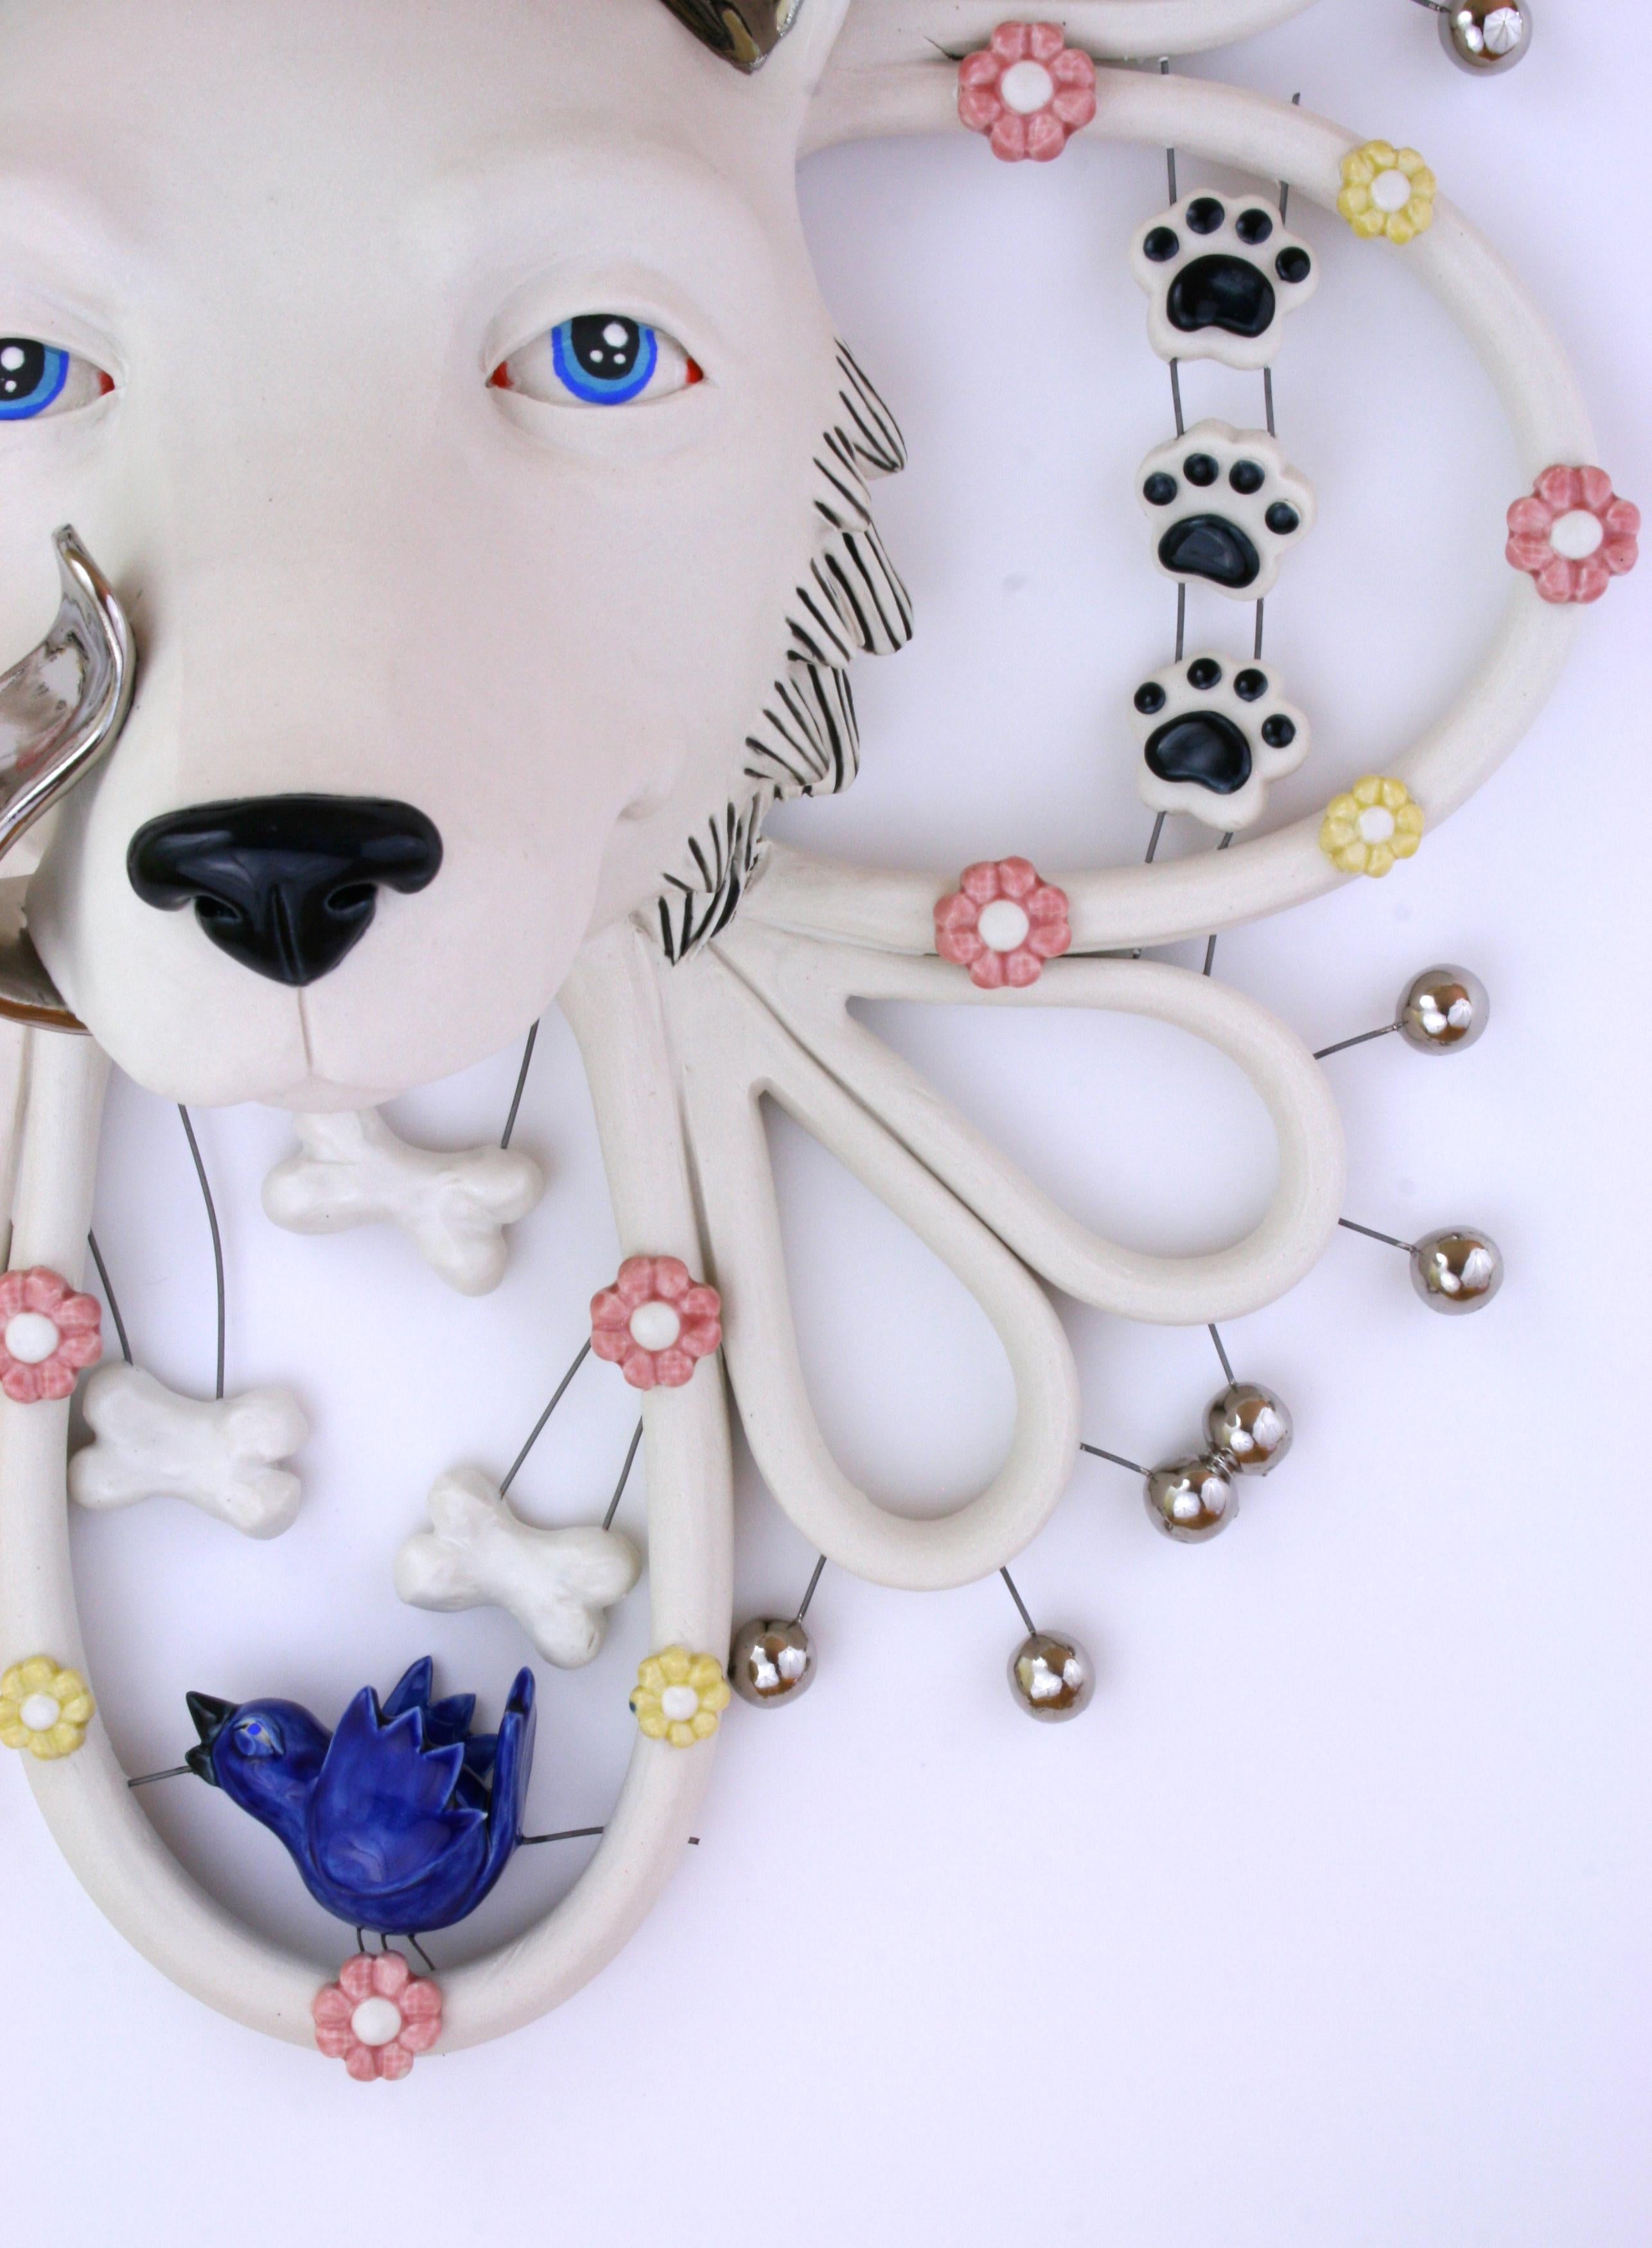 SILVER TONGUED WOLF - porcelain ceramic sculpture of wolf, bones, birds, flowers - Pop Art Sculpture by Taylor Robenalt